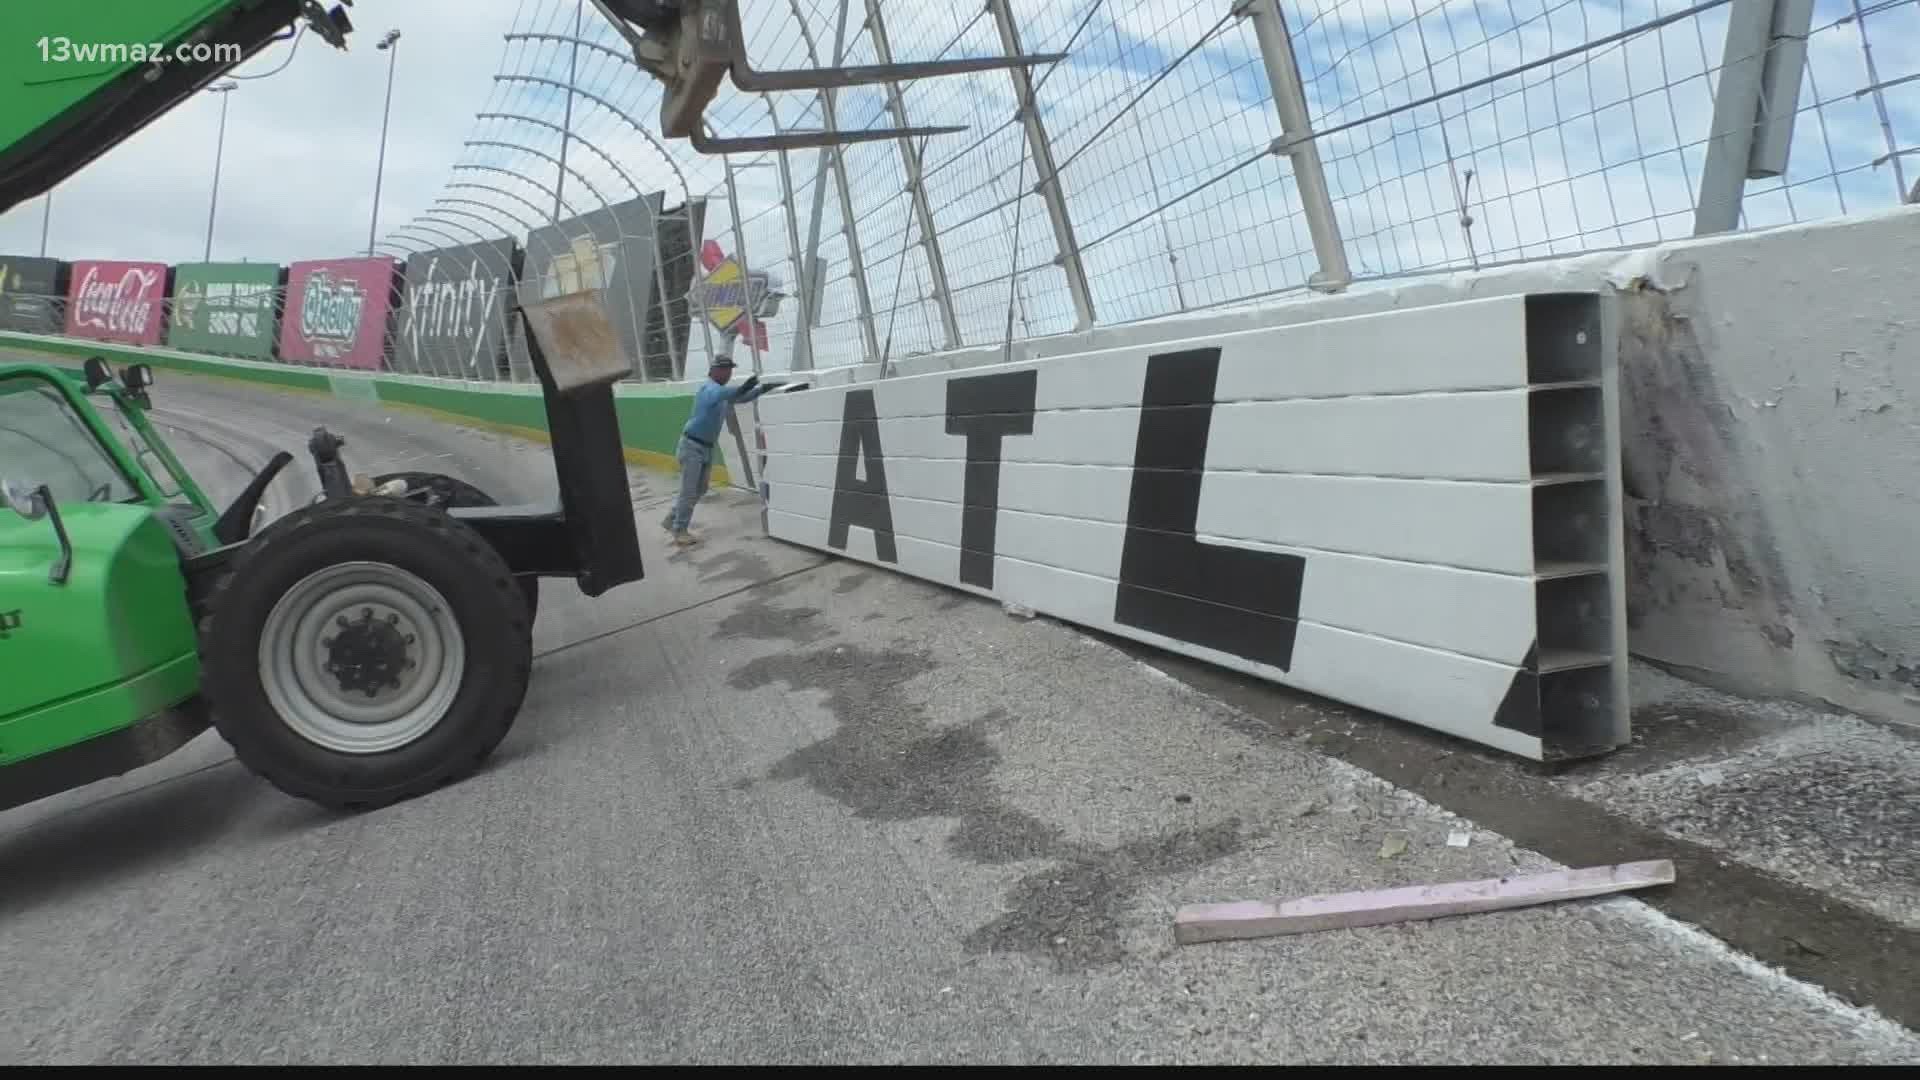 Atlanta Motor Speedway begins repaving their asphalt 13wmaz